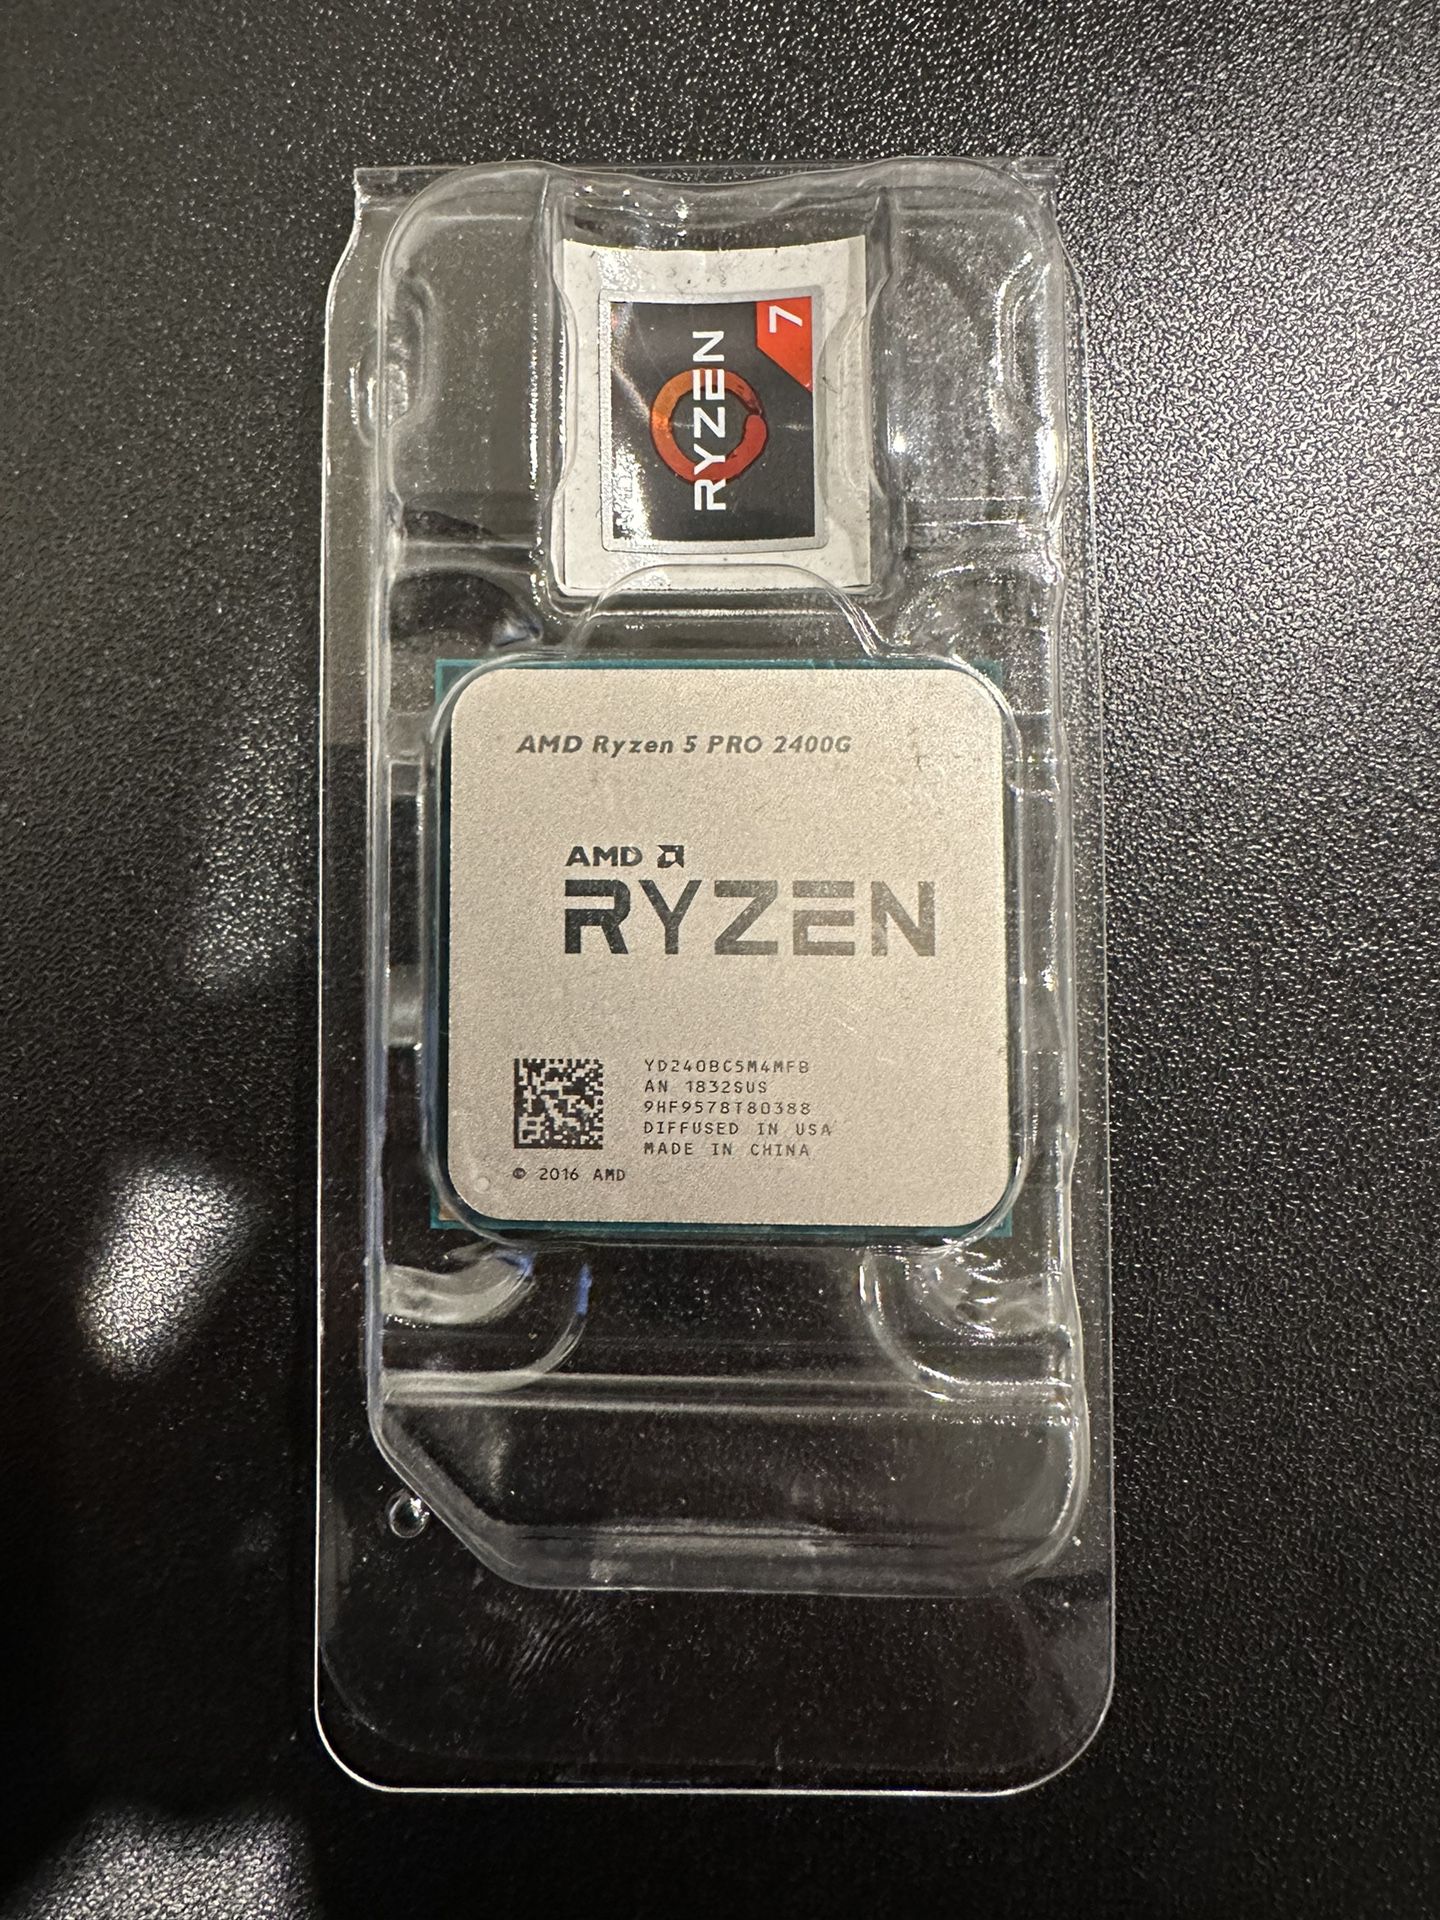 Ryzen 5 Pro 2400G CPU